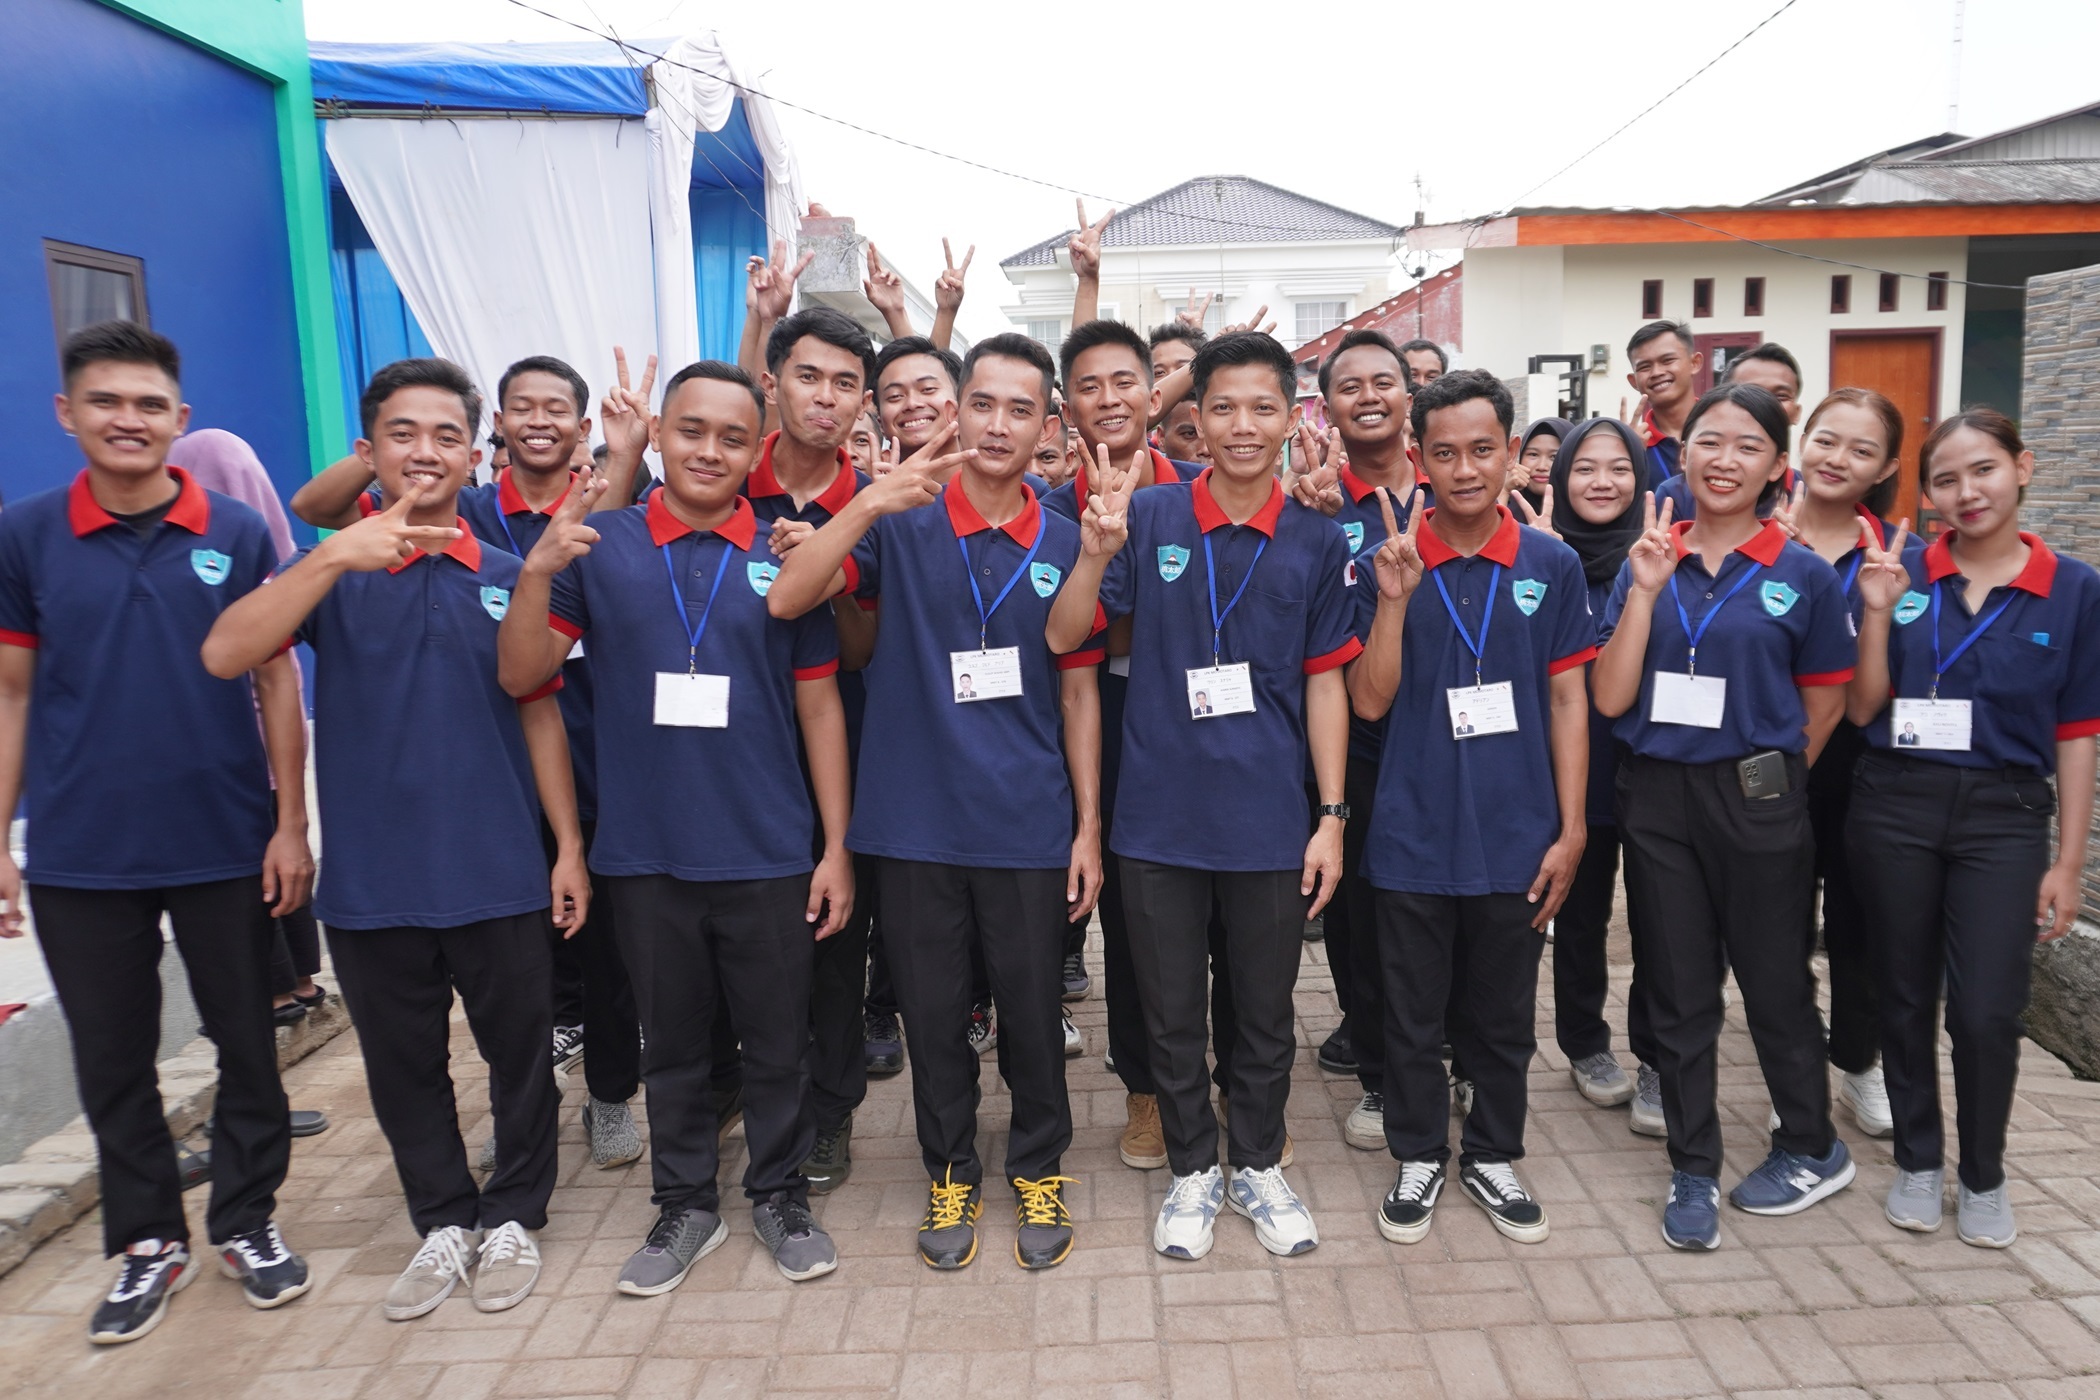 ROY株式会社、インドネシアに建築研修センターを開校　
建築職人達の直接技術指導による技能実習生育成を実施 – Net24